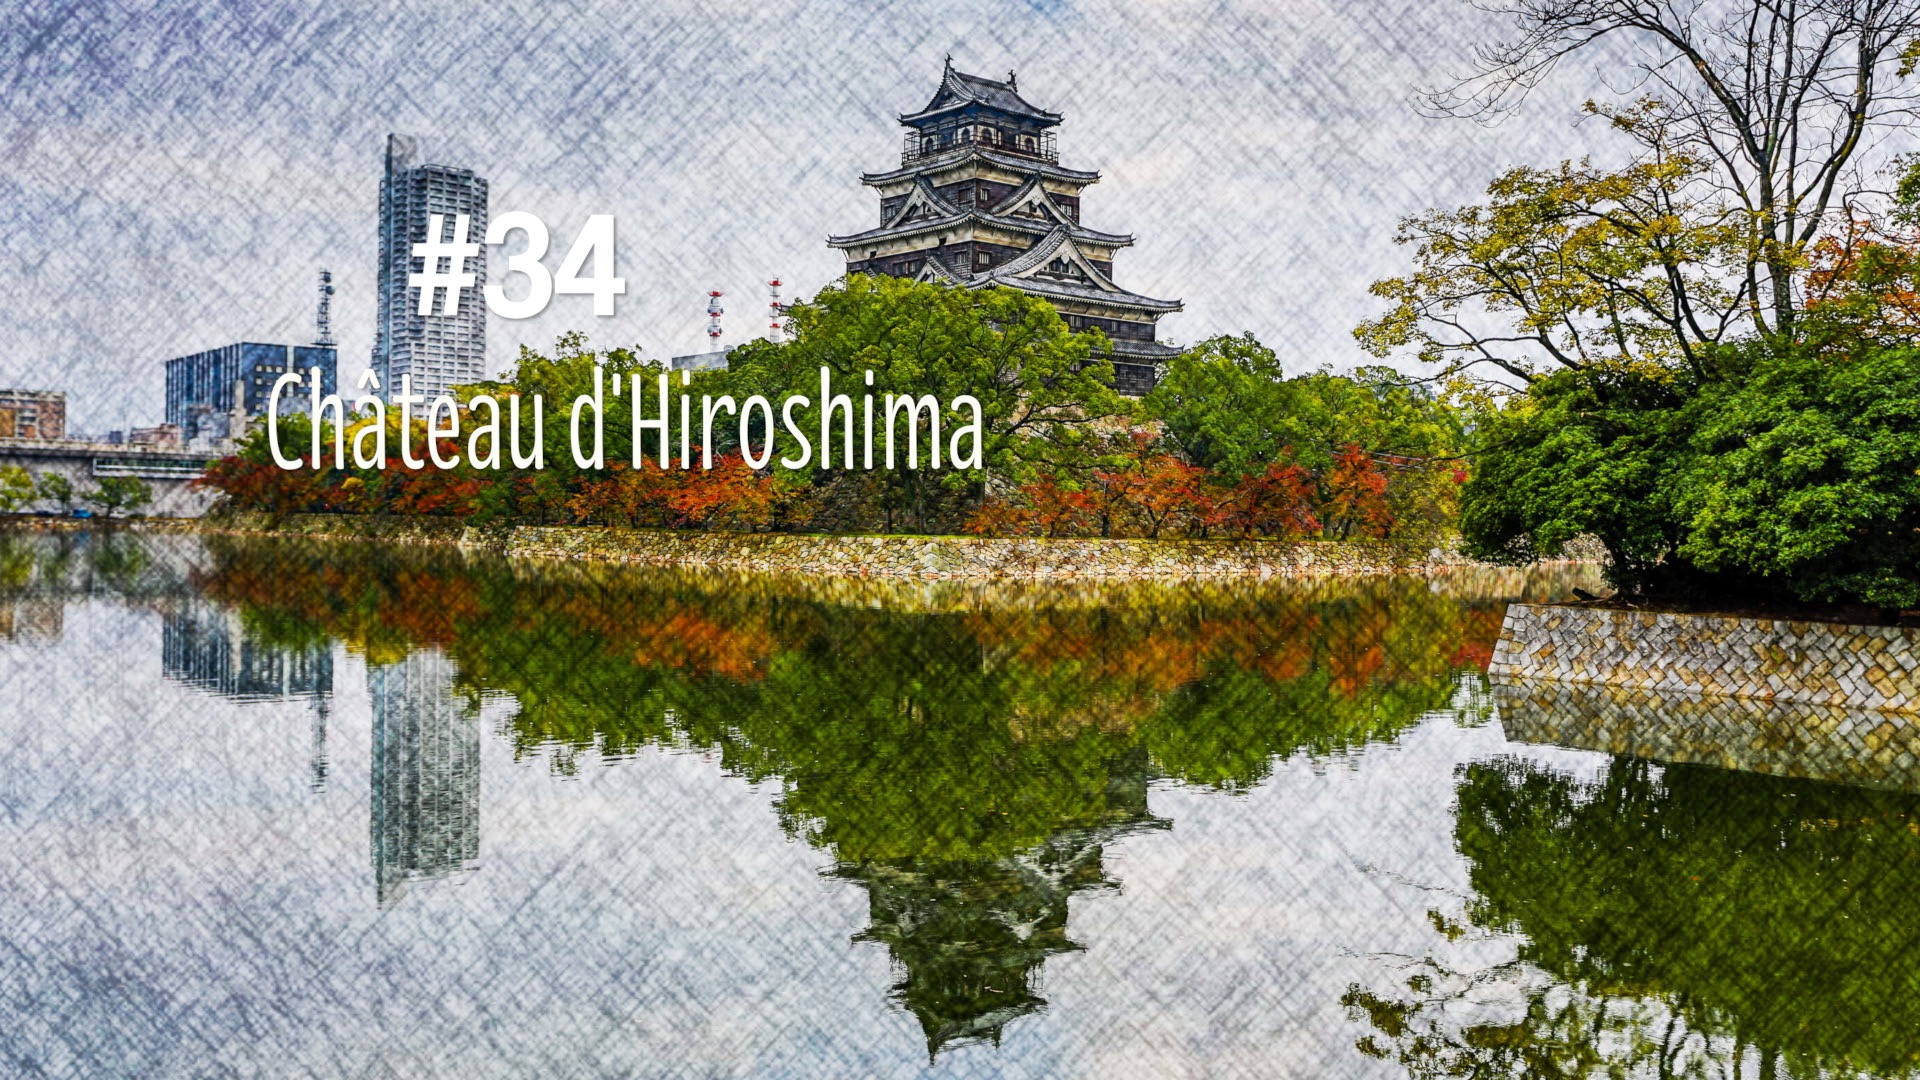 Le château d’Hiroshima